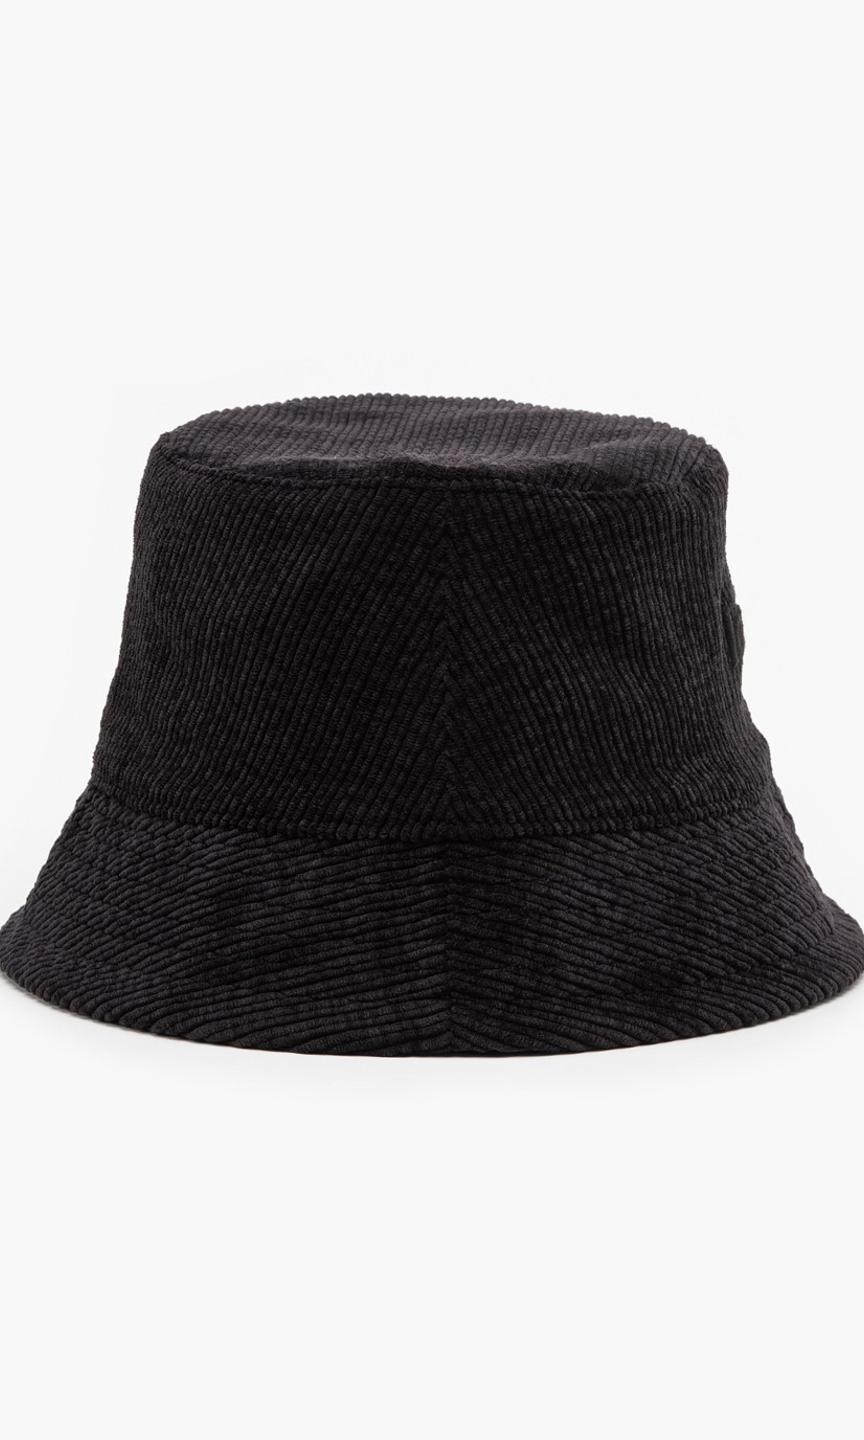 Buy Levi's® Men's Reversible Bucket Hat | Levi’s® Official Online Store TH